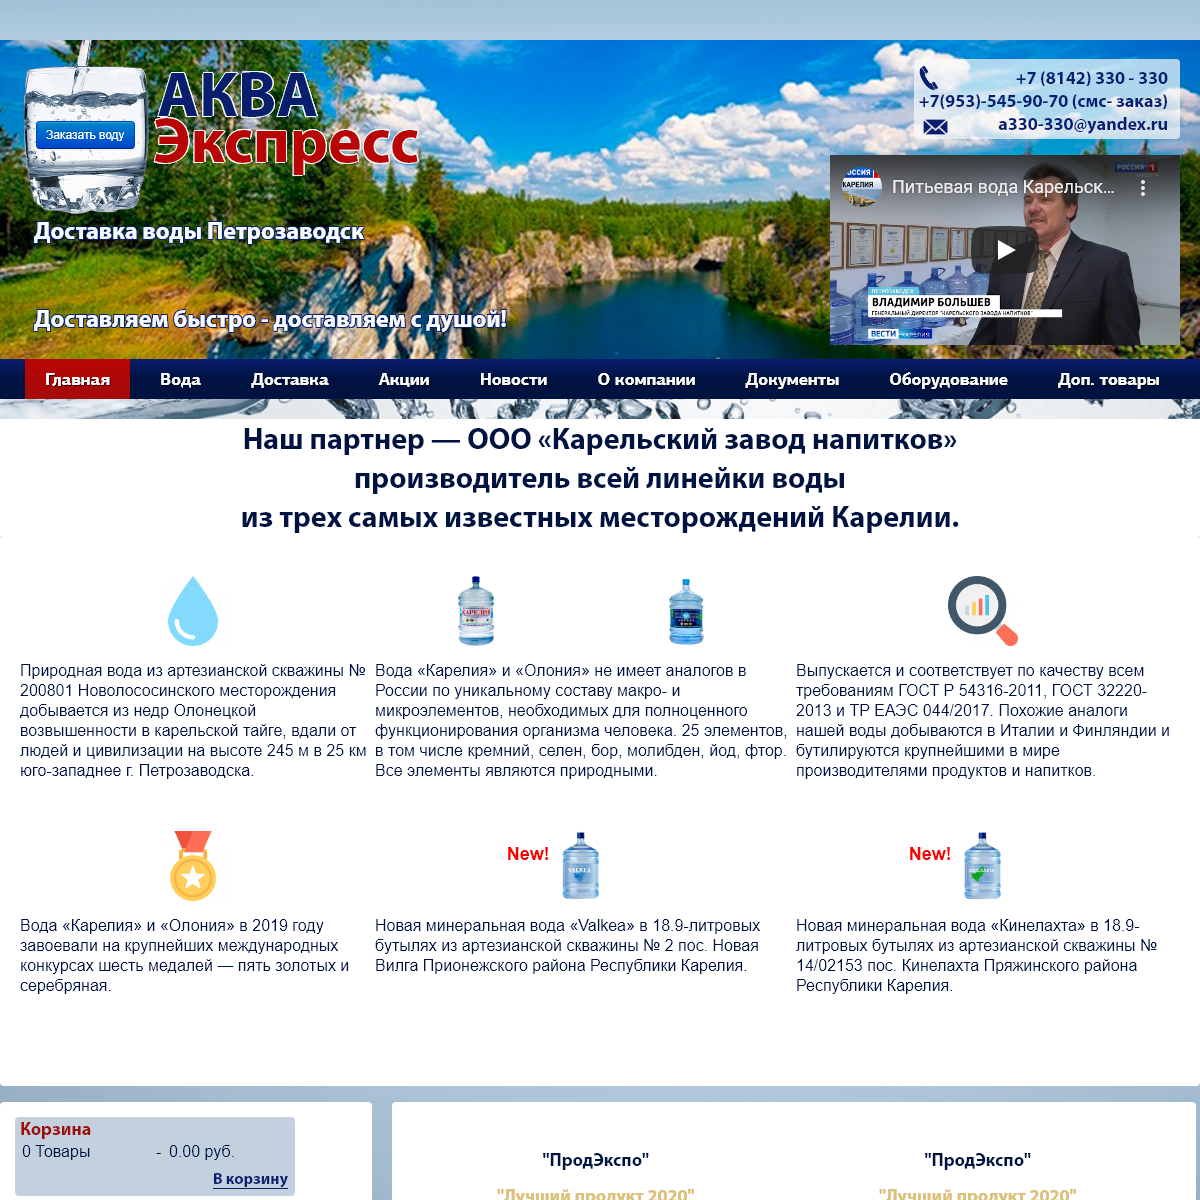 A complete backup of aquaexpress-ptz.ru